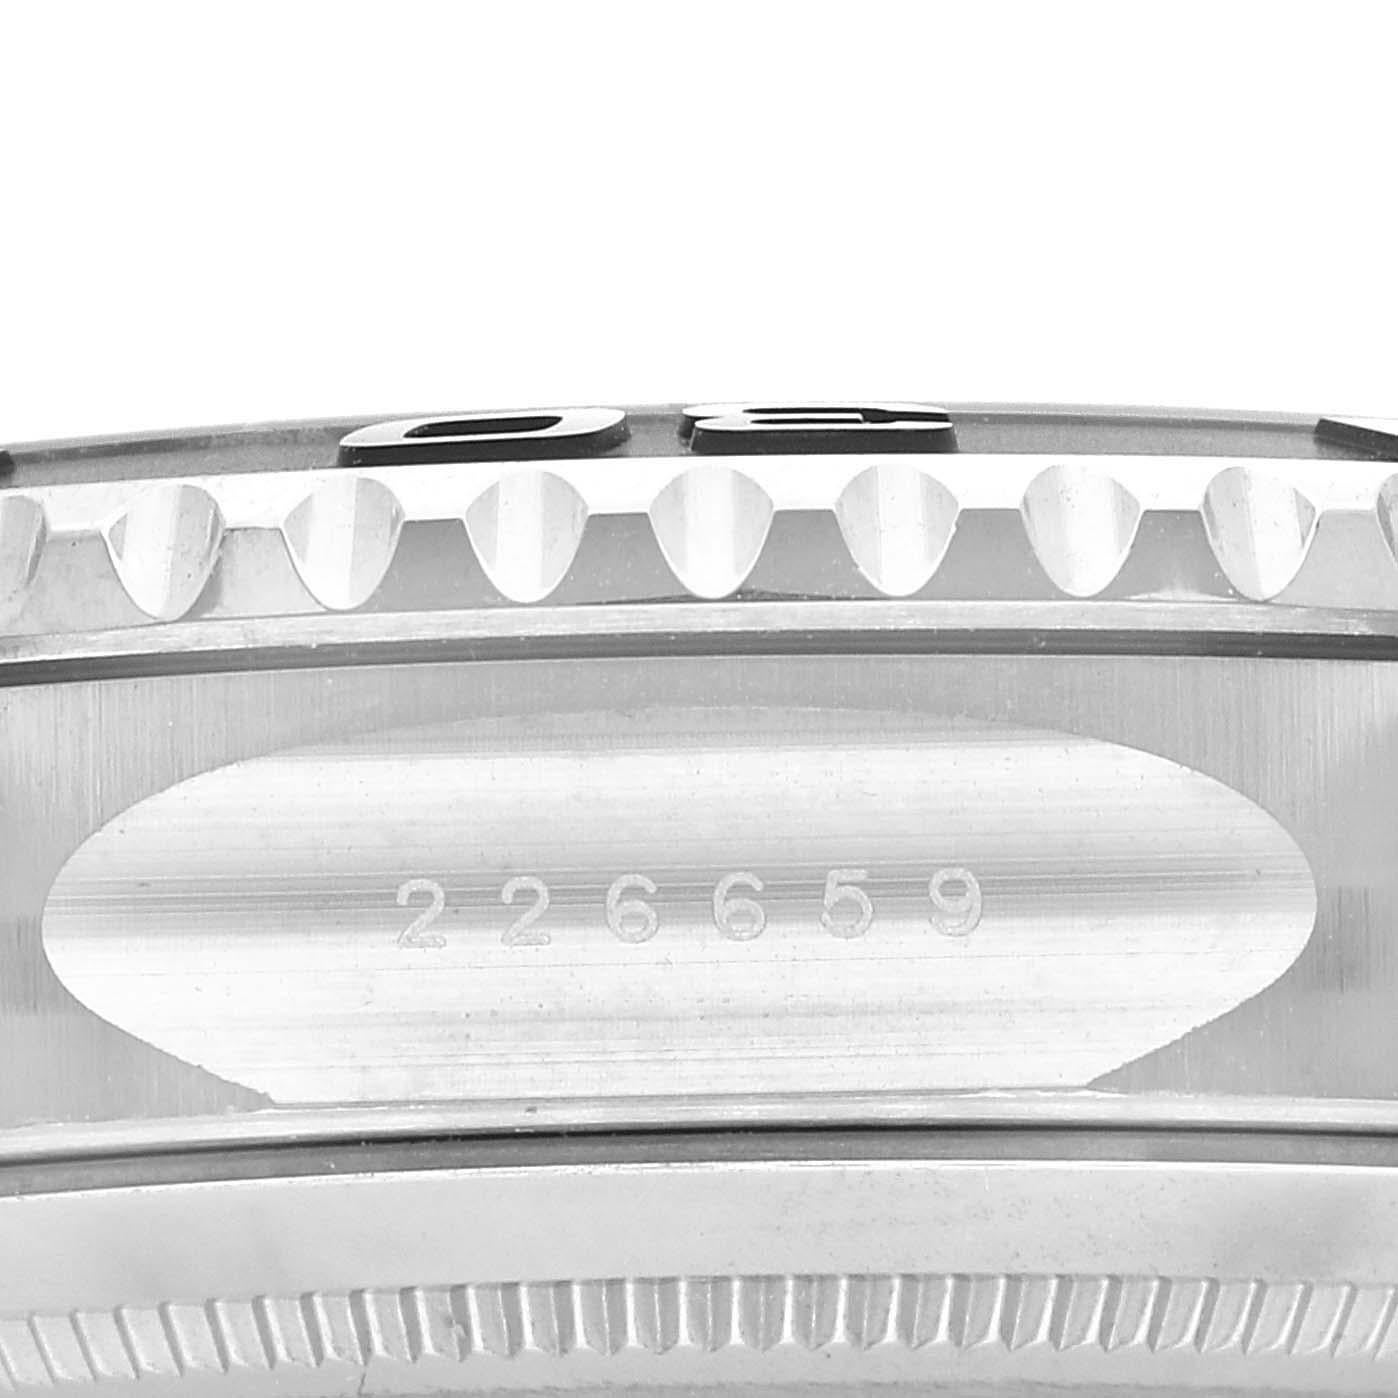 Rolex Yachtmaster White Gold Oysterflex Bracelet Mens Watch 226659 Box Card 2